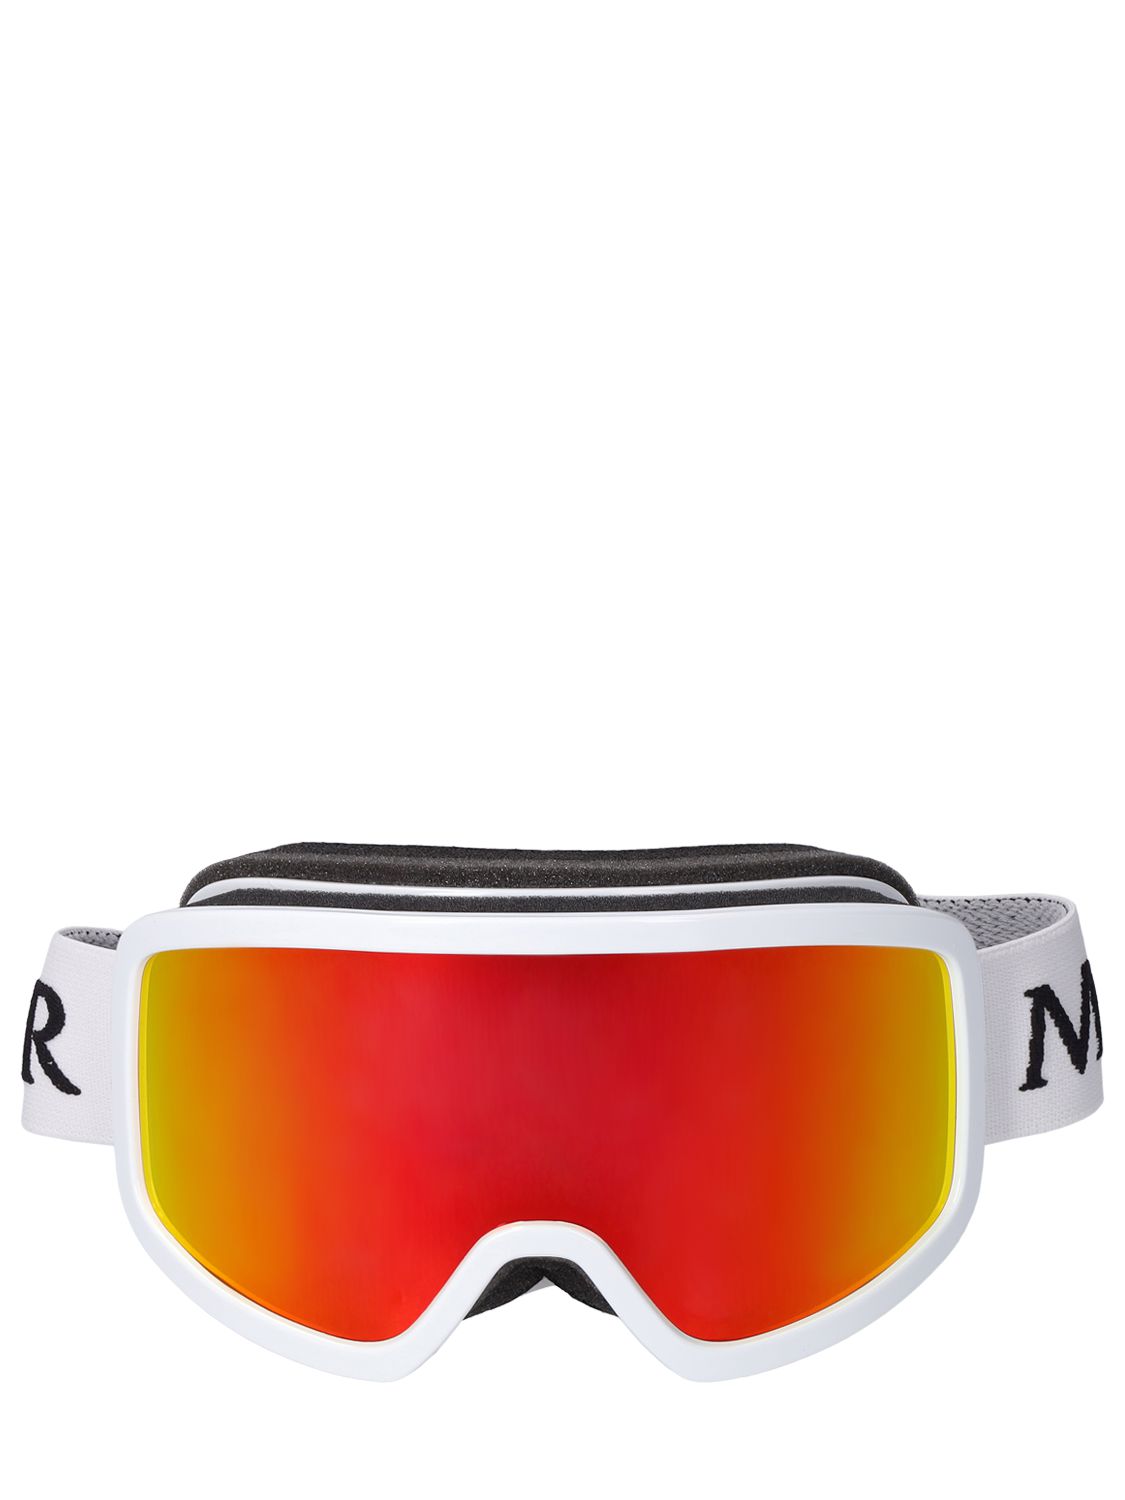 Ski & Snowboarding Goggles